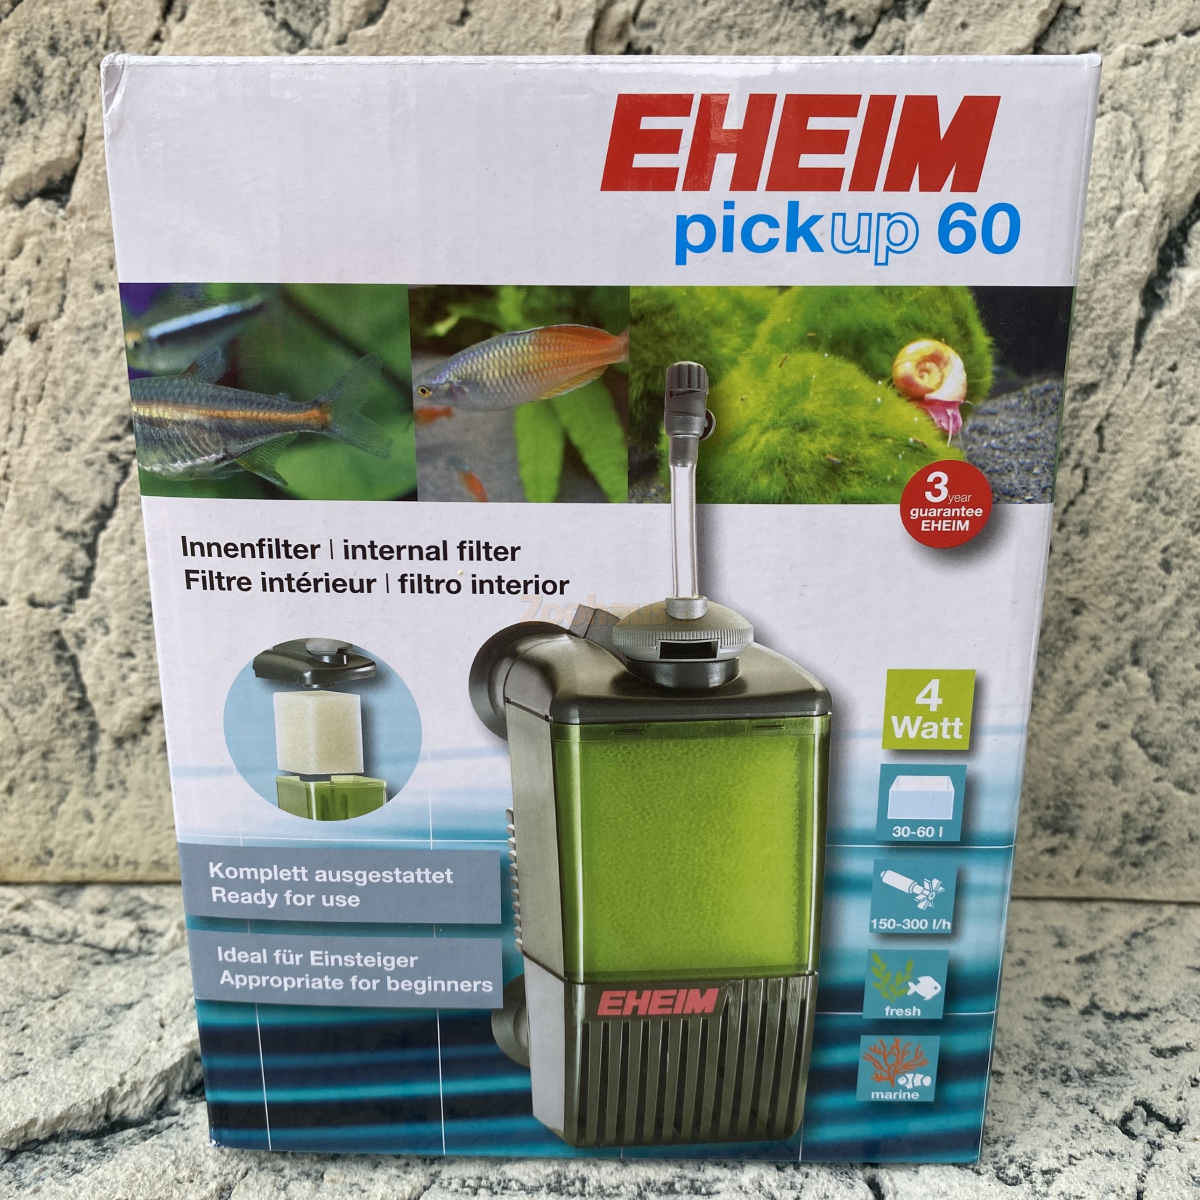 EHEIM pickup 60 - Innenfilter